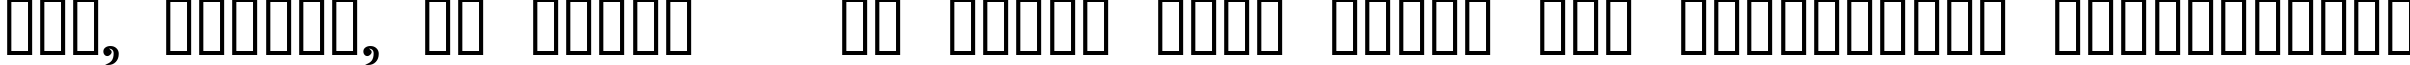 Пример написания шрифтом Occoluchi Minicaps текста на украинском